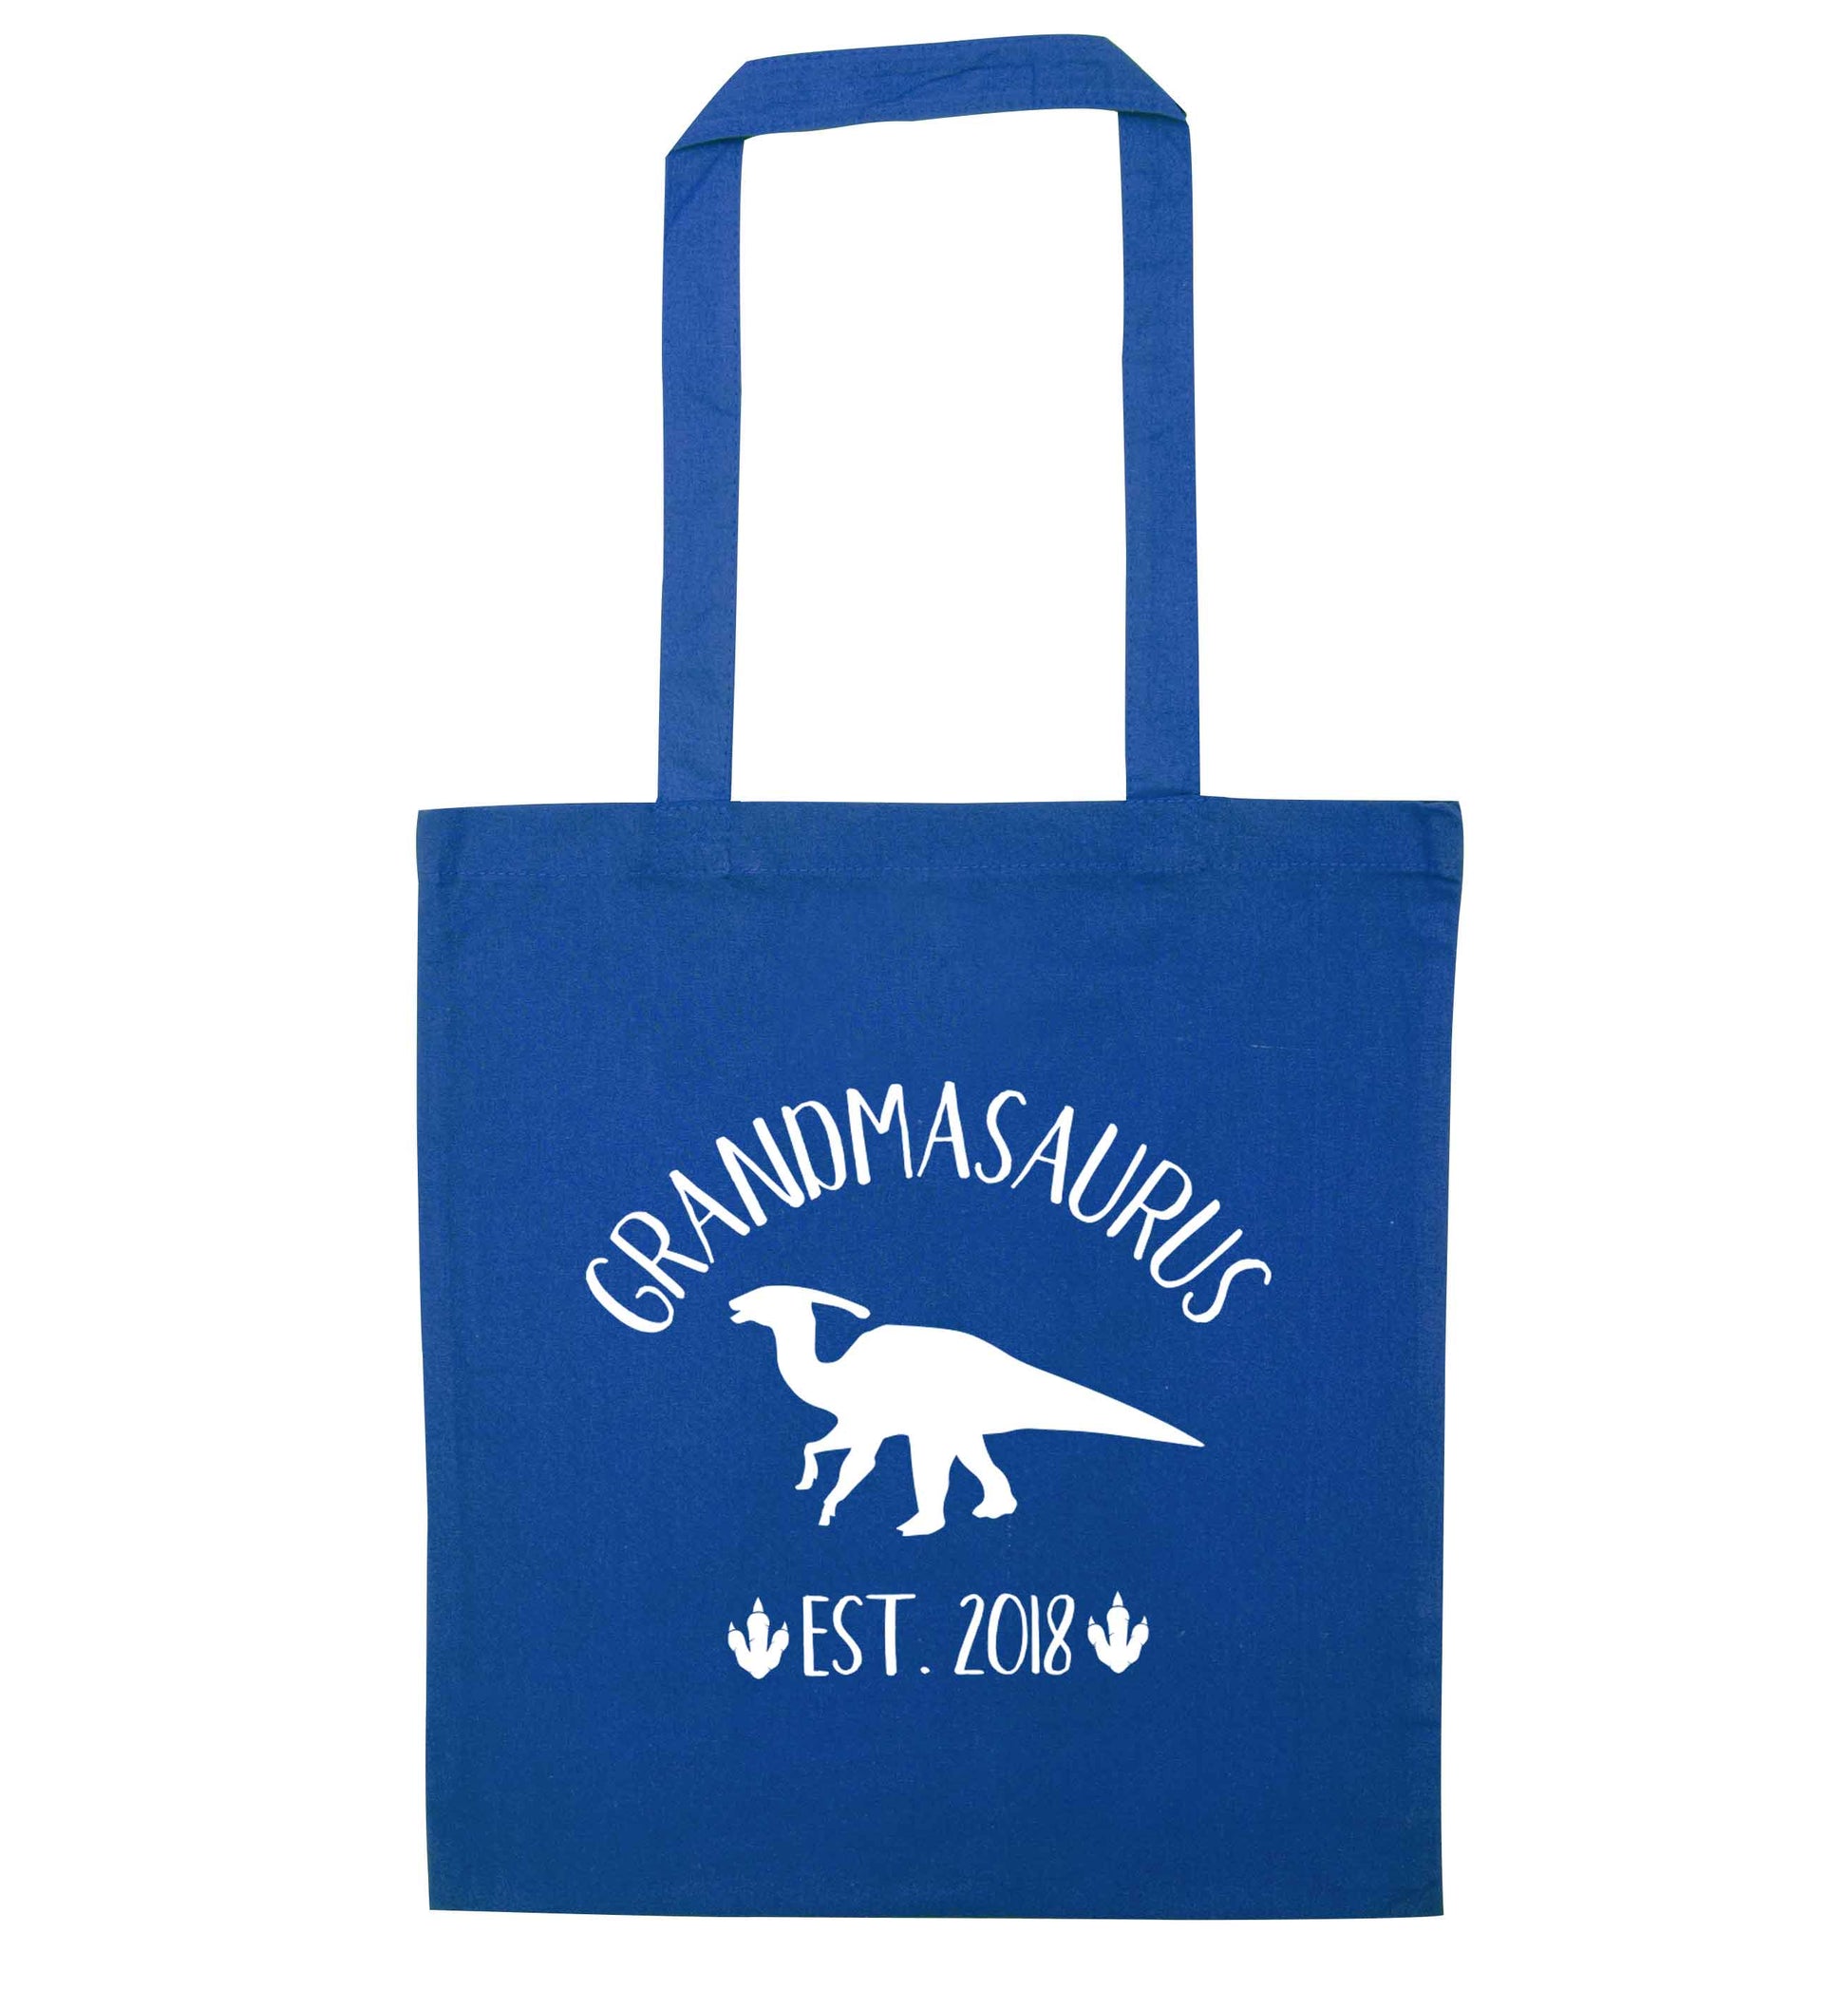 Personalised grandmasaurus since (custom date) blue tote bag